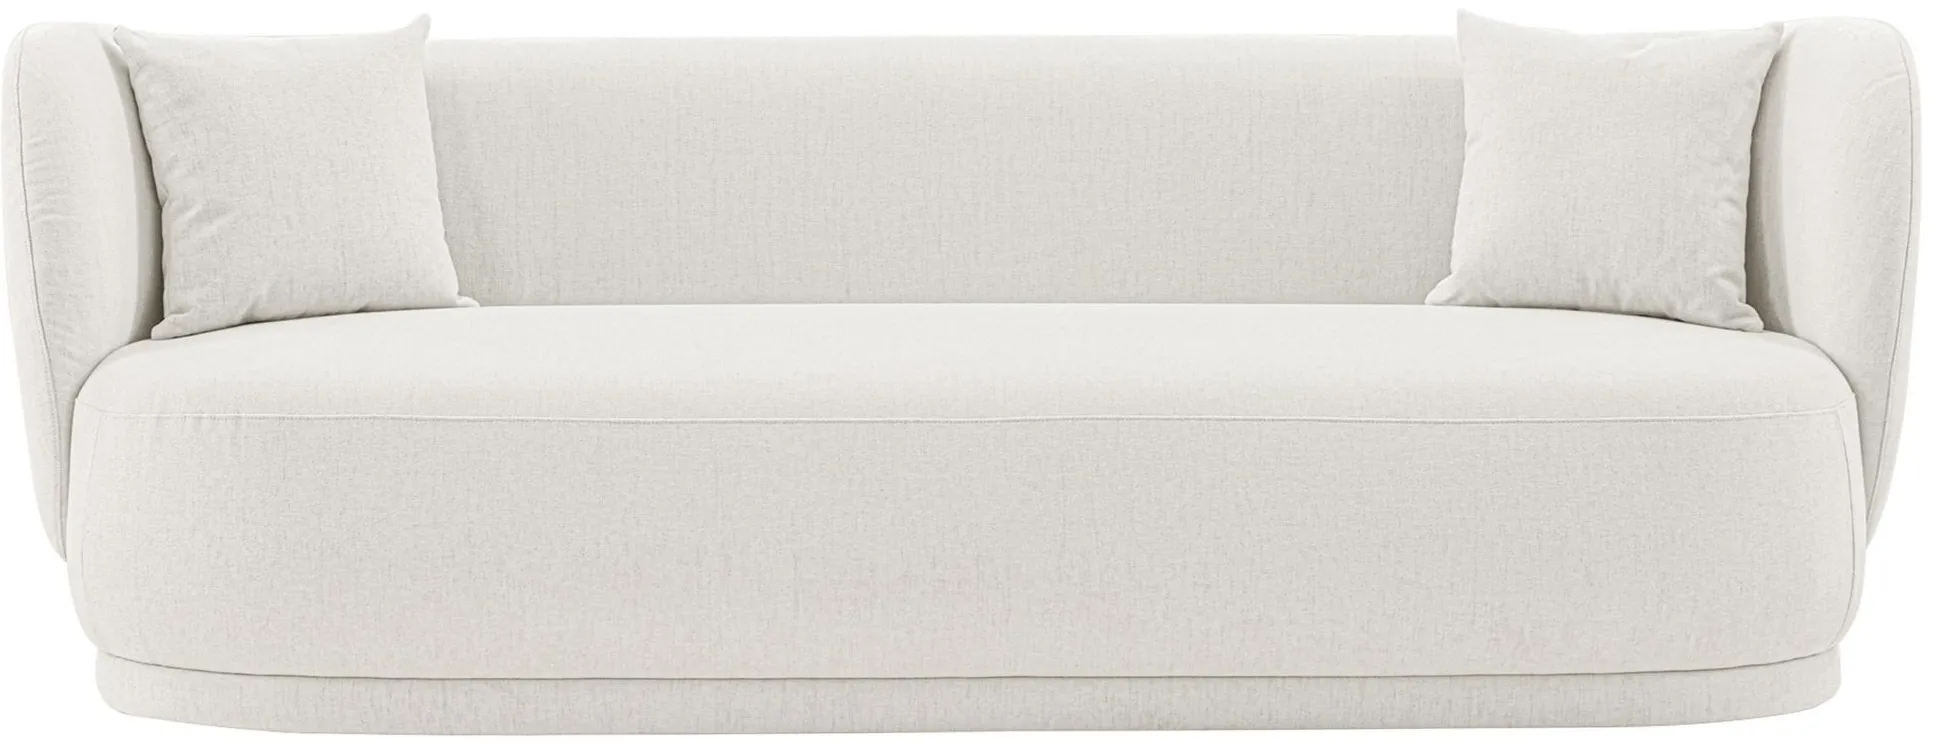 Siri Sofa in Cream by Manhattan Comfort